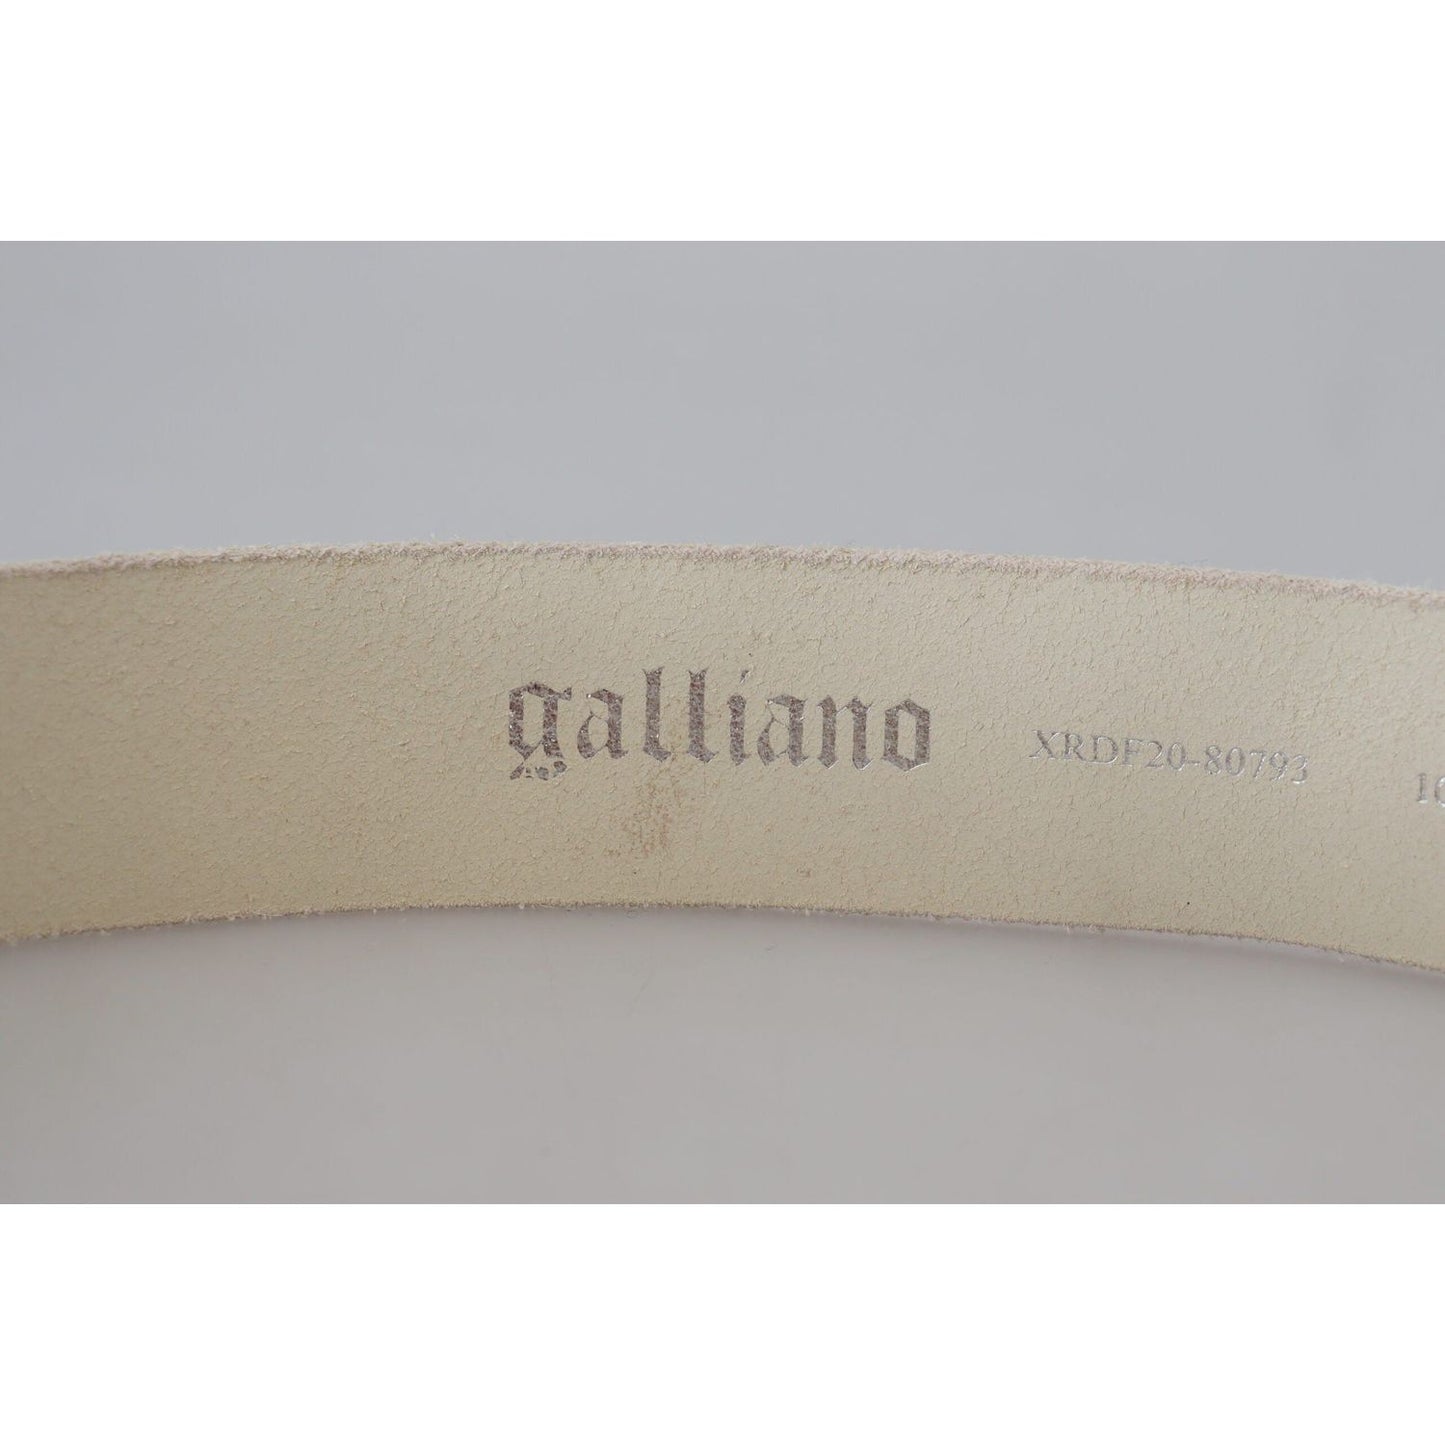 John Galliano Elegant Pink Leather Fashion Belt pink-leather-letter-logo-round-buckle-waist-belt